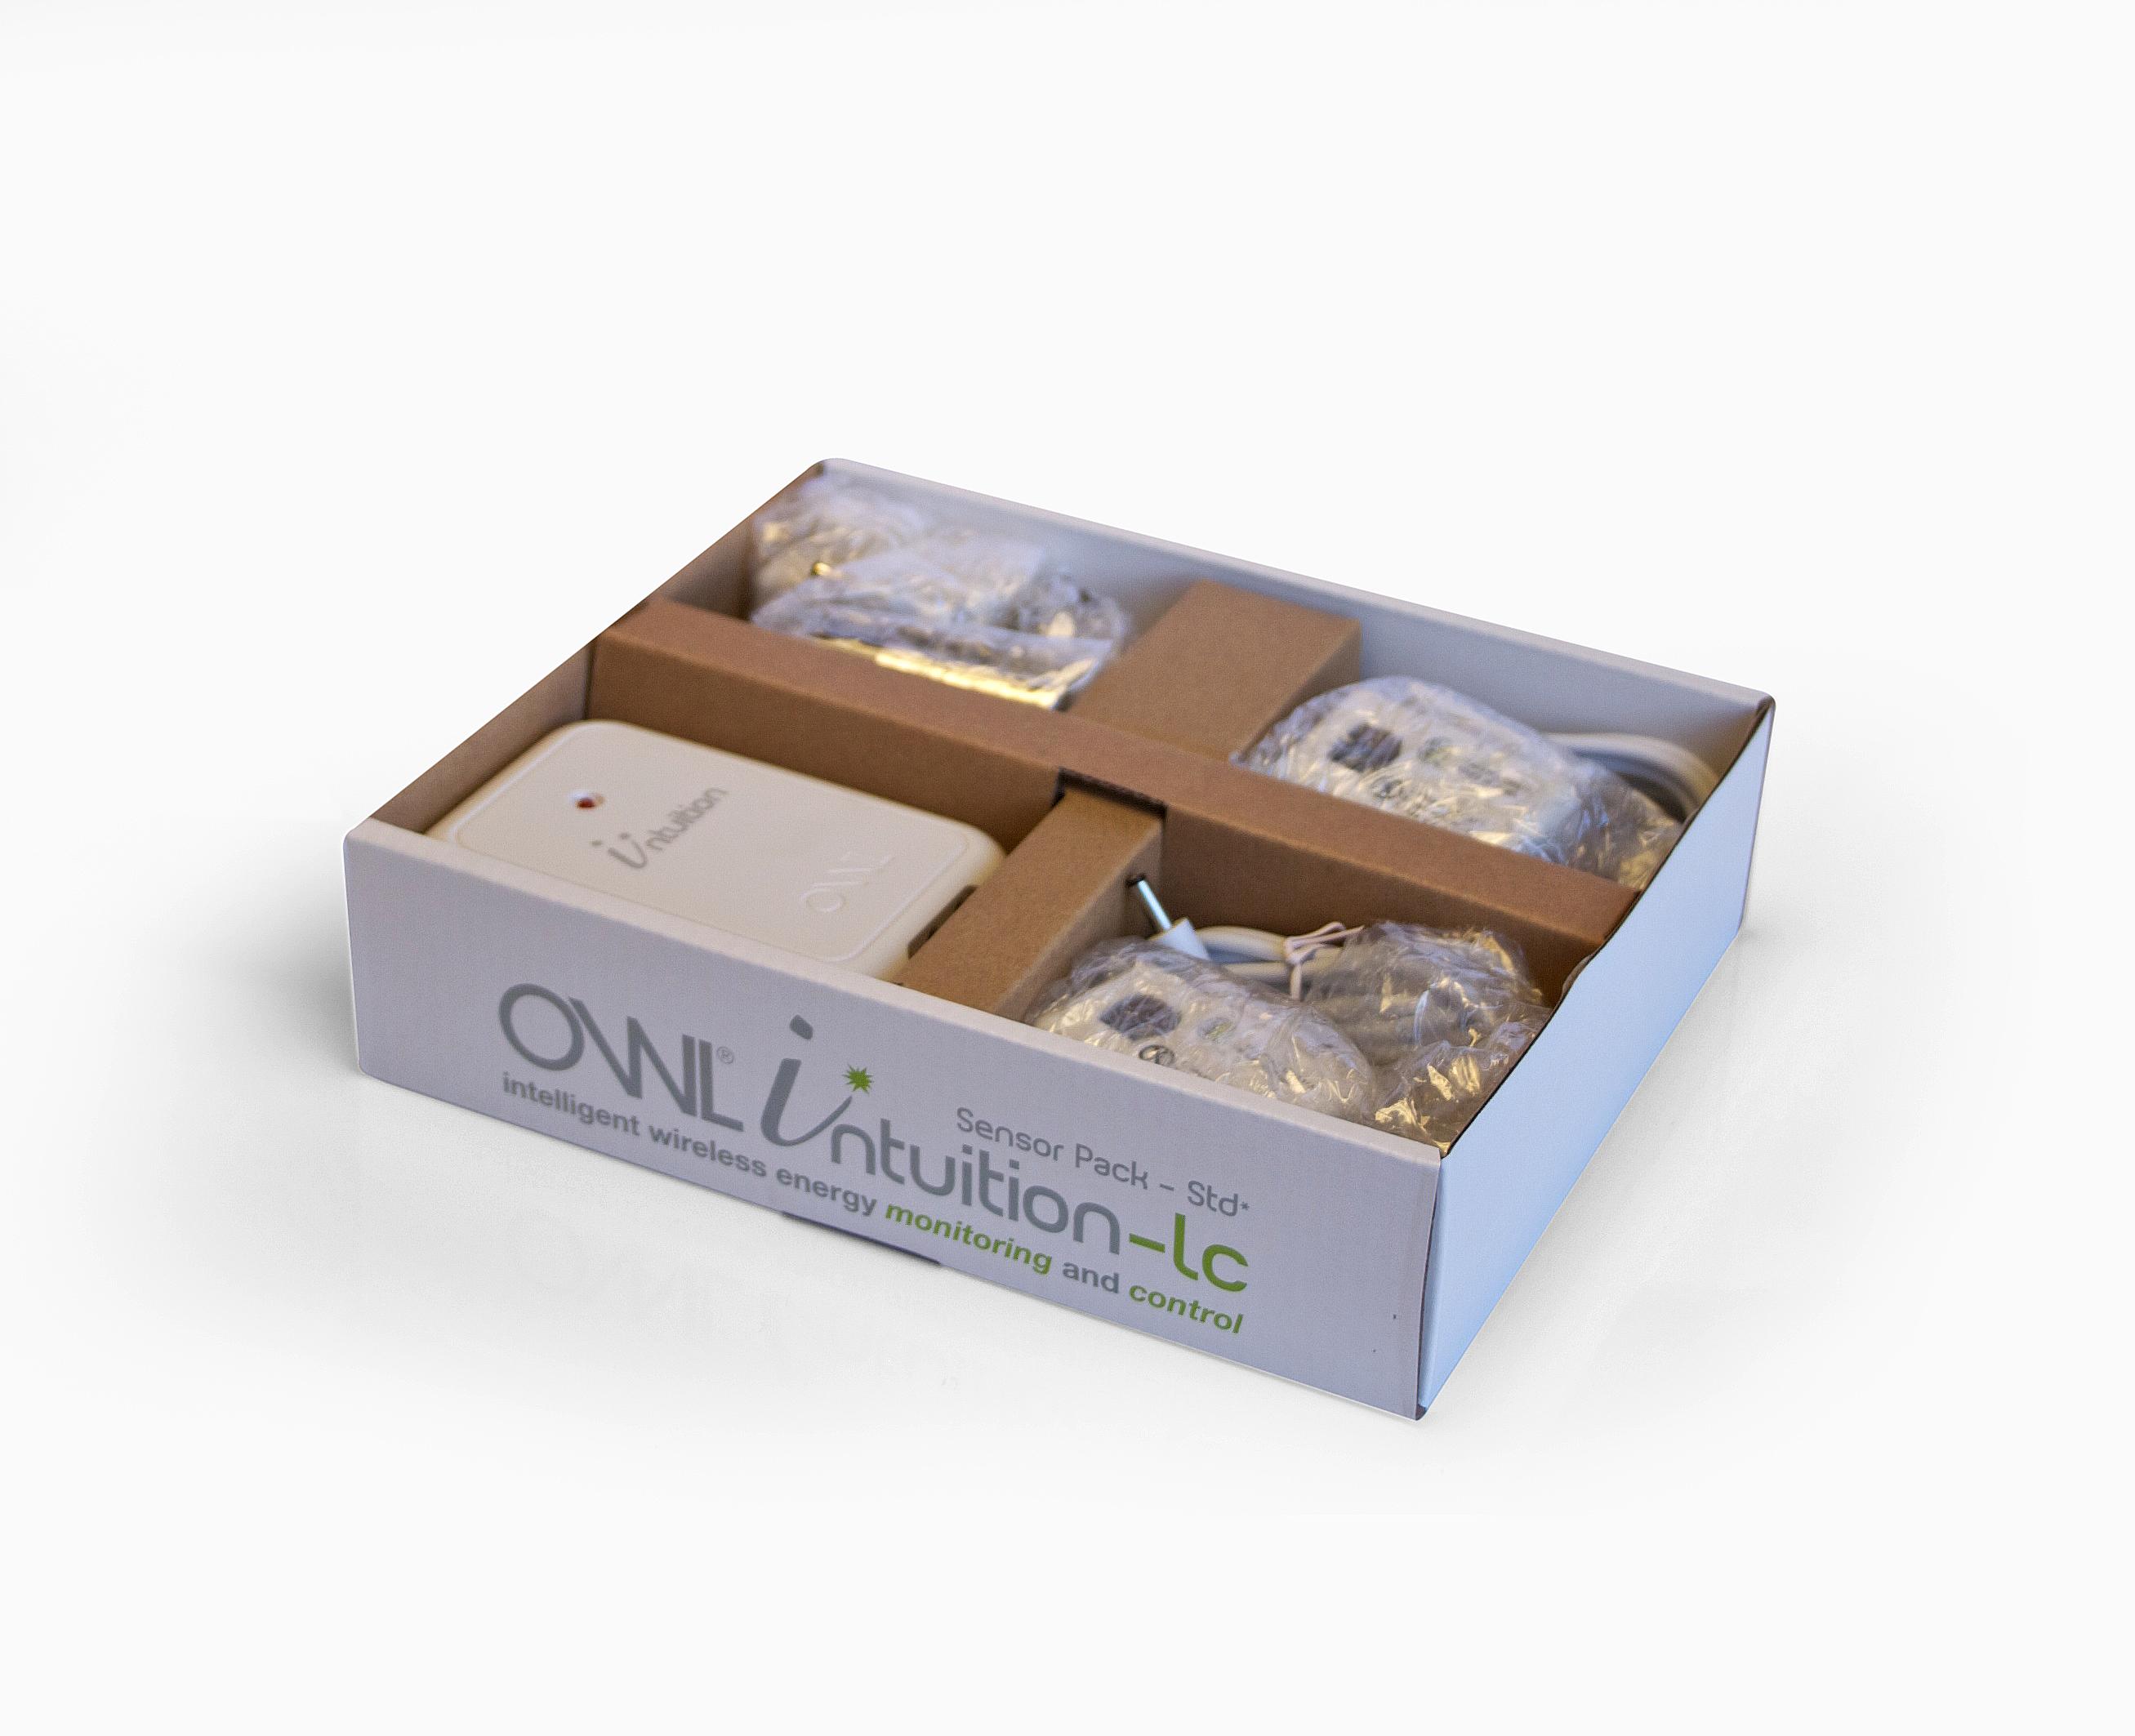 Owl Intuition-lc Sensor Pack Standard